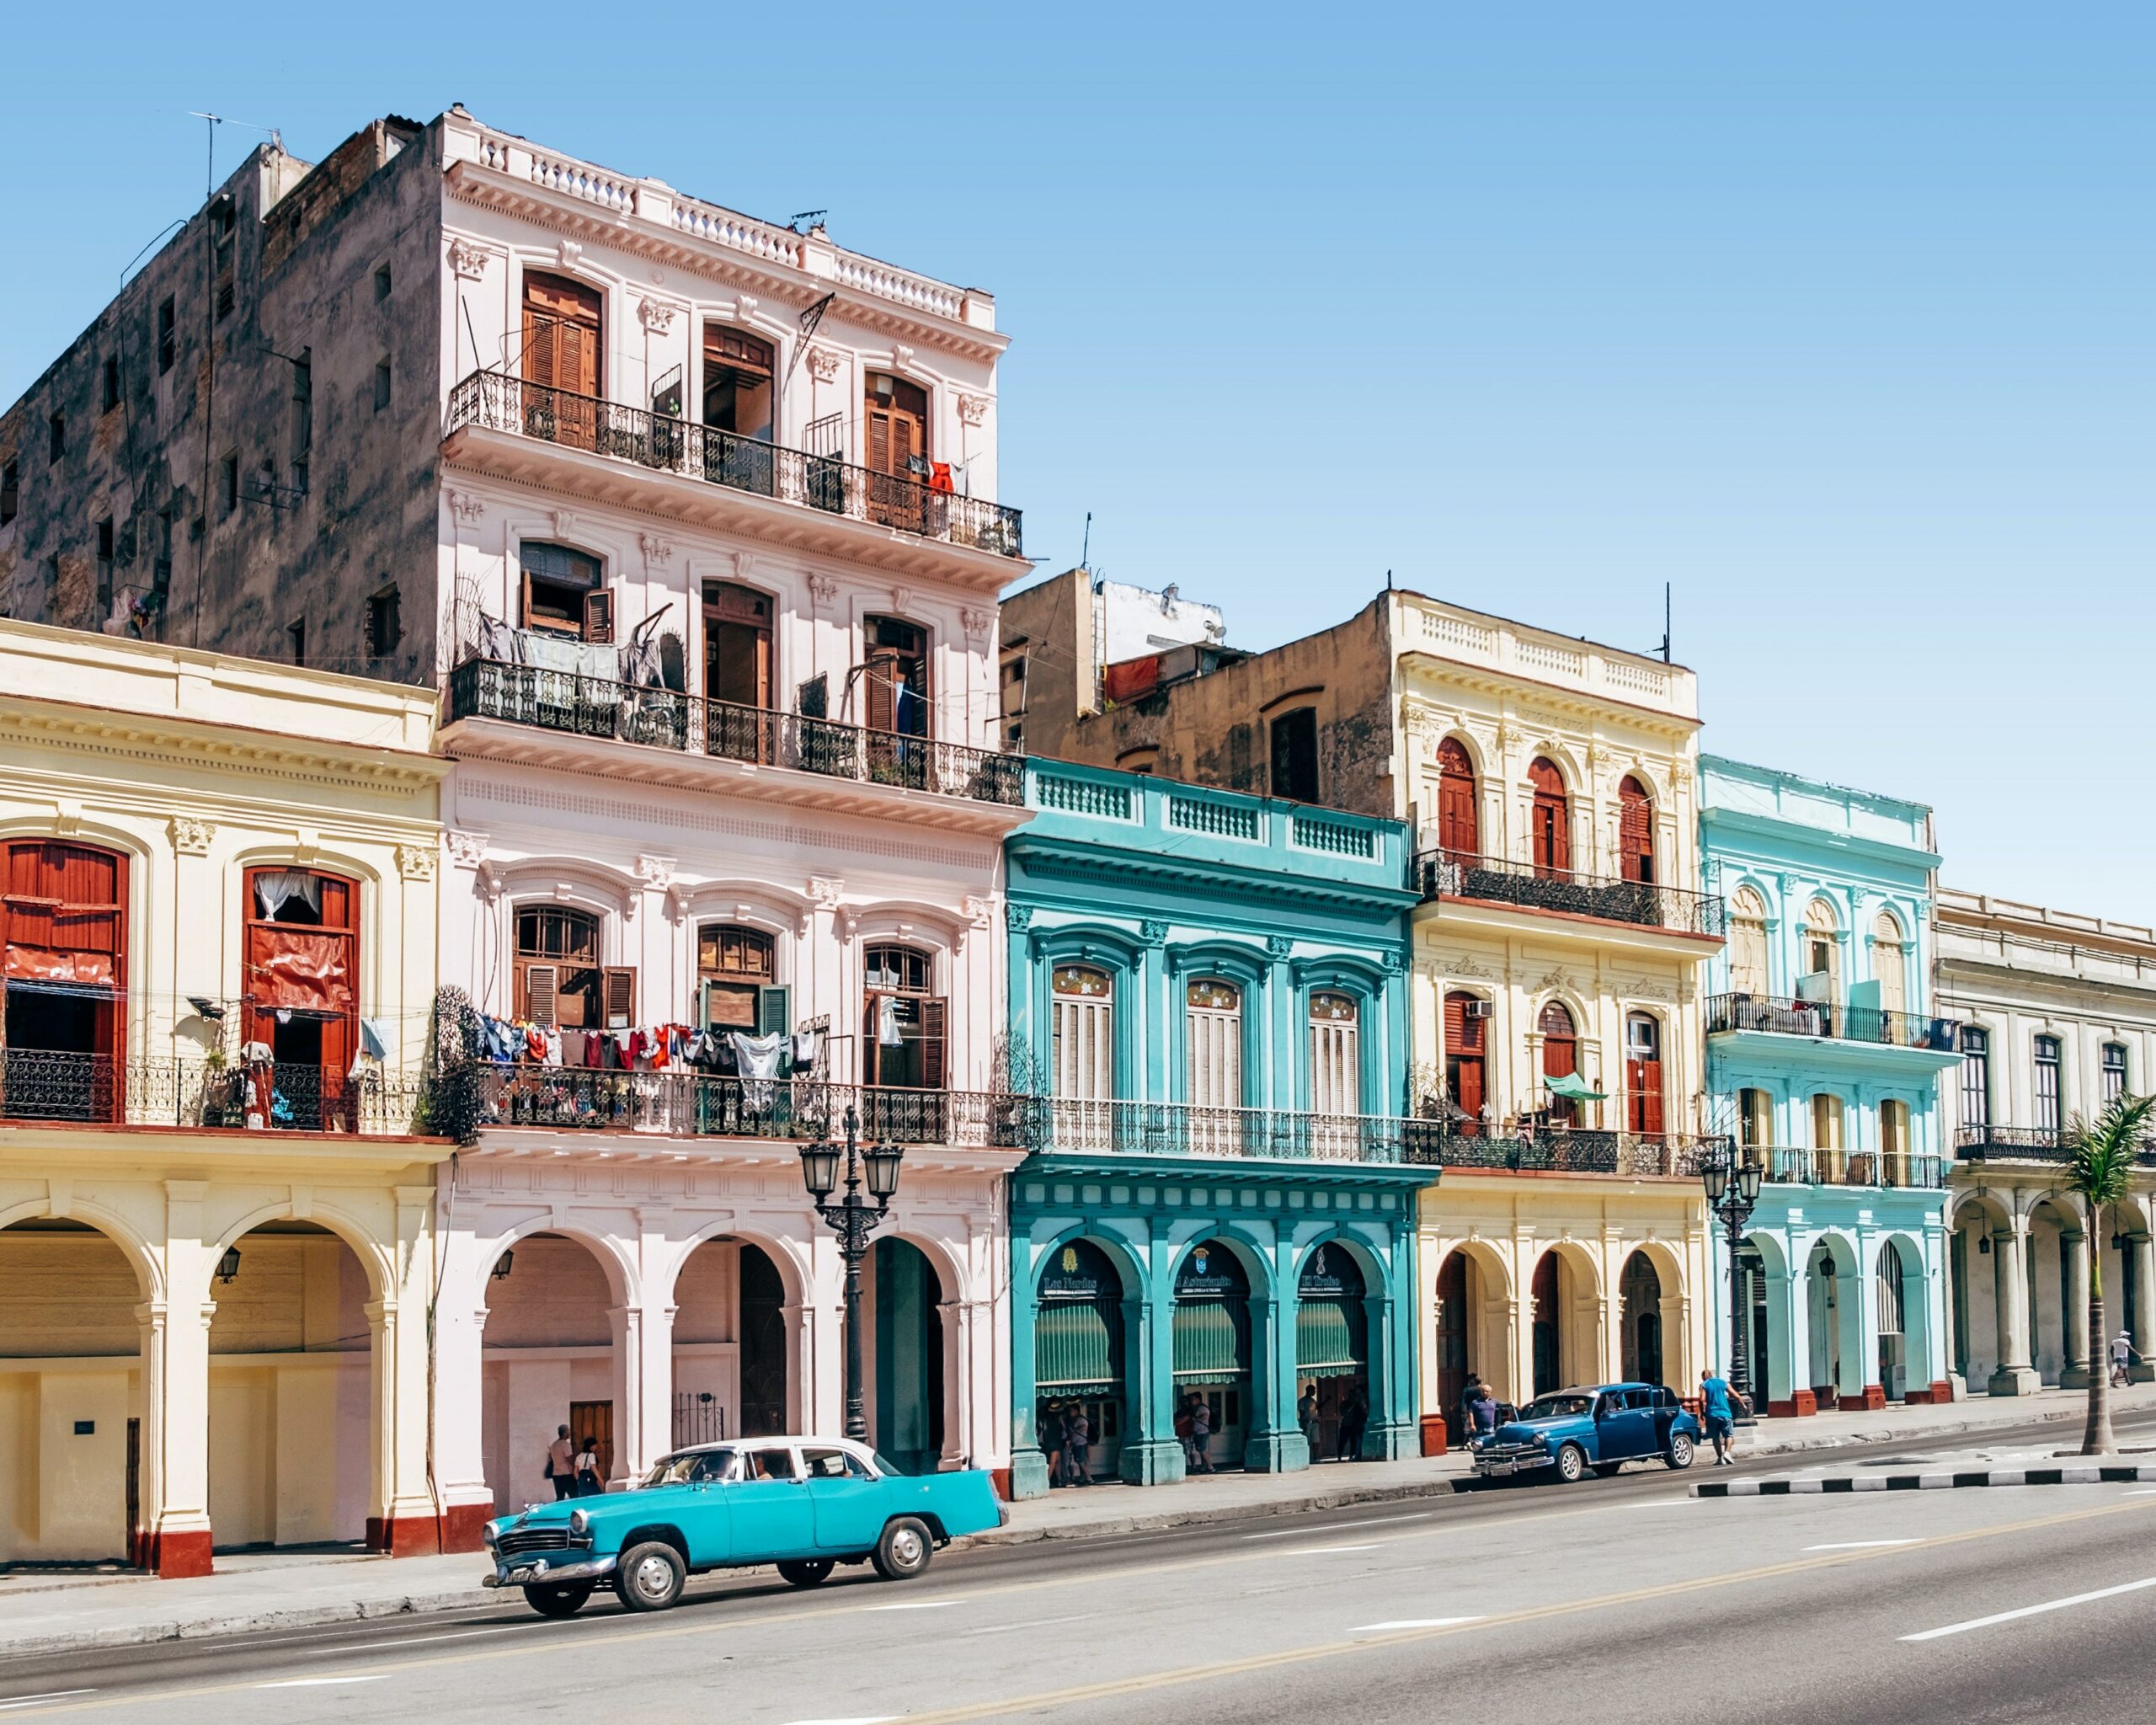 A colourful strip of buildings in Havana, Cuba.